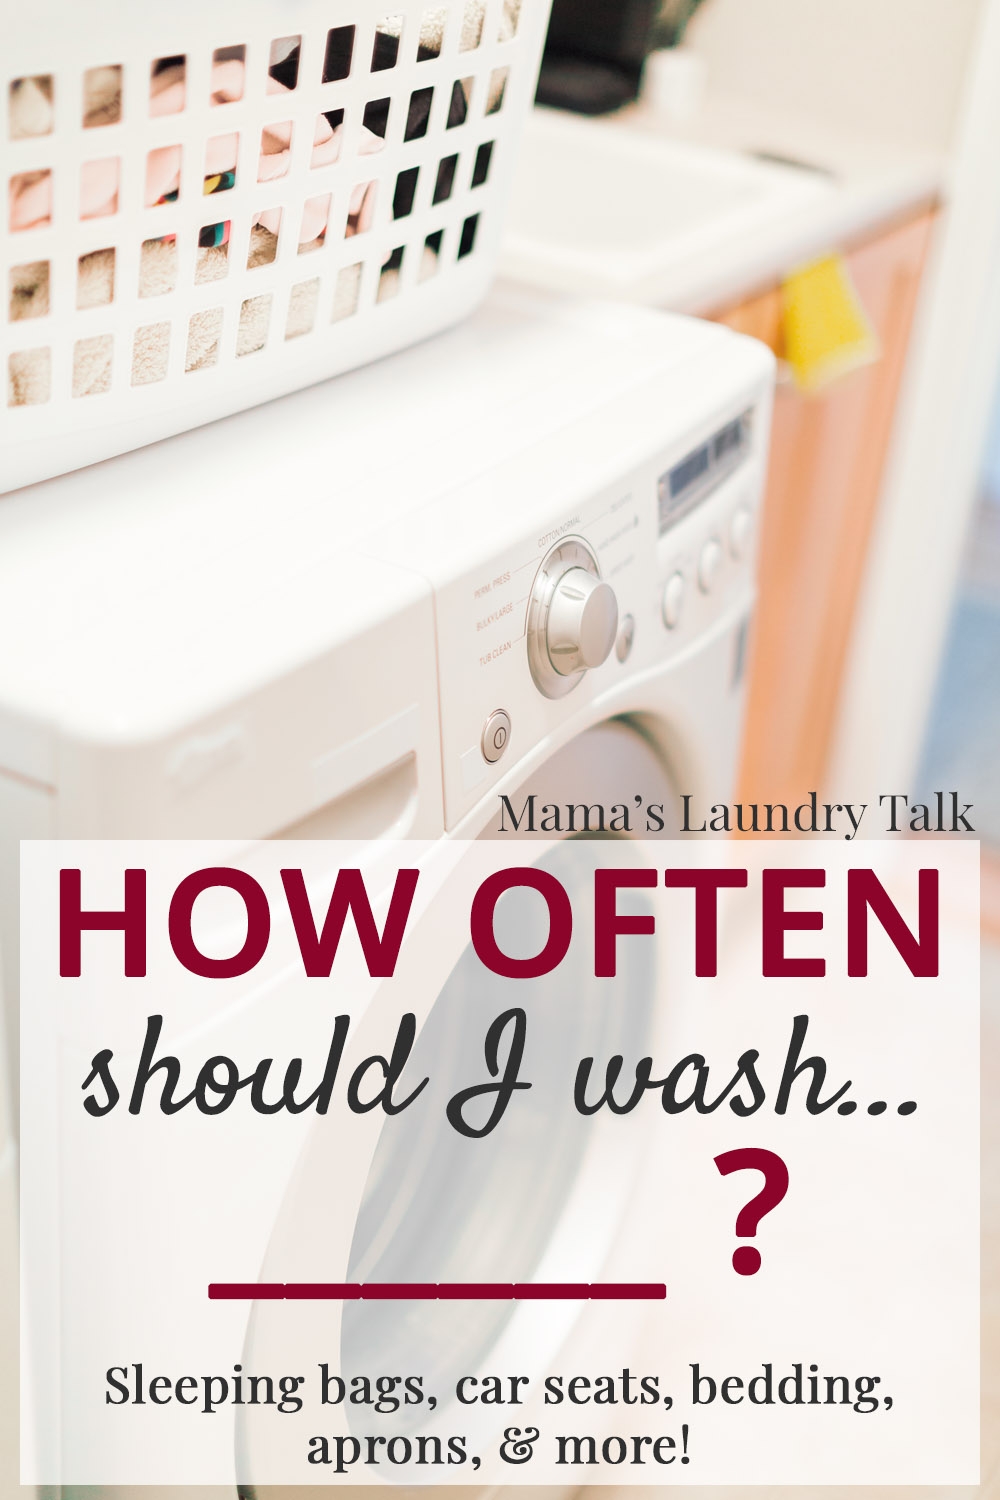 How Often Should I Wash ____?